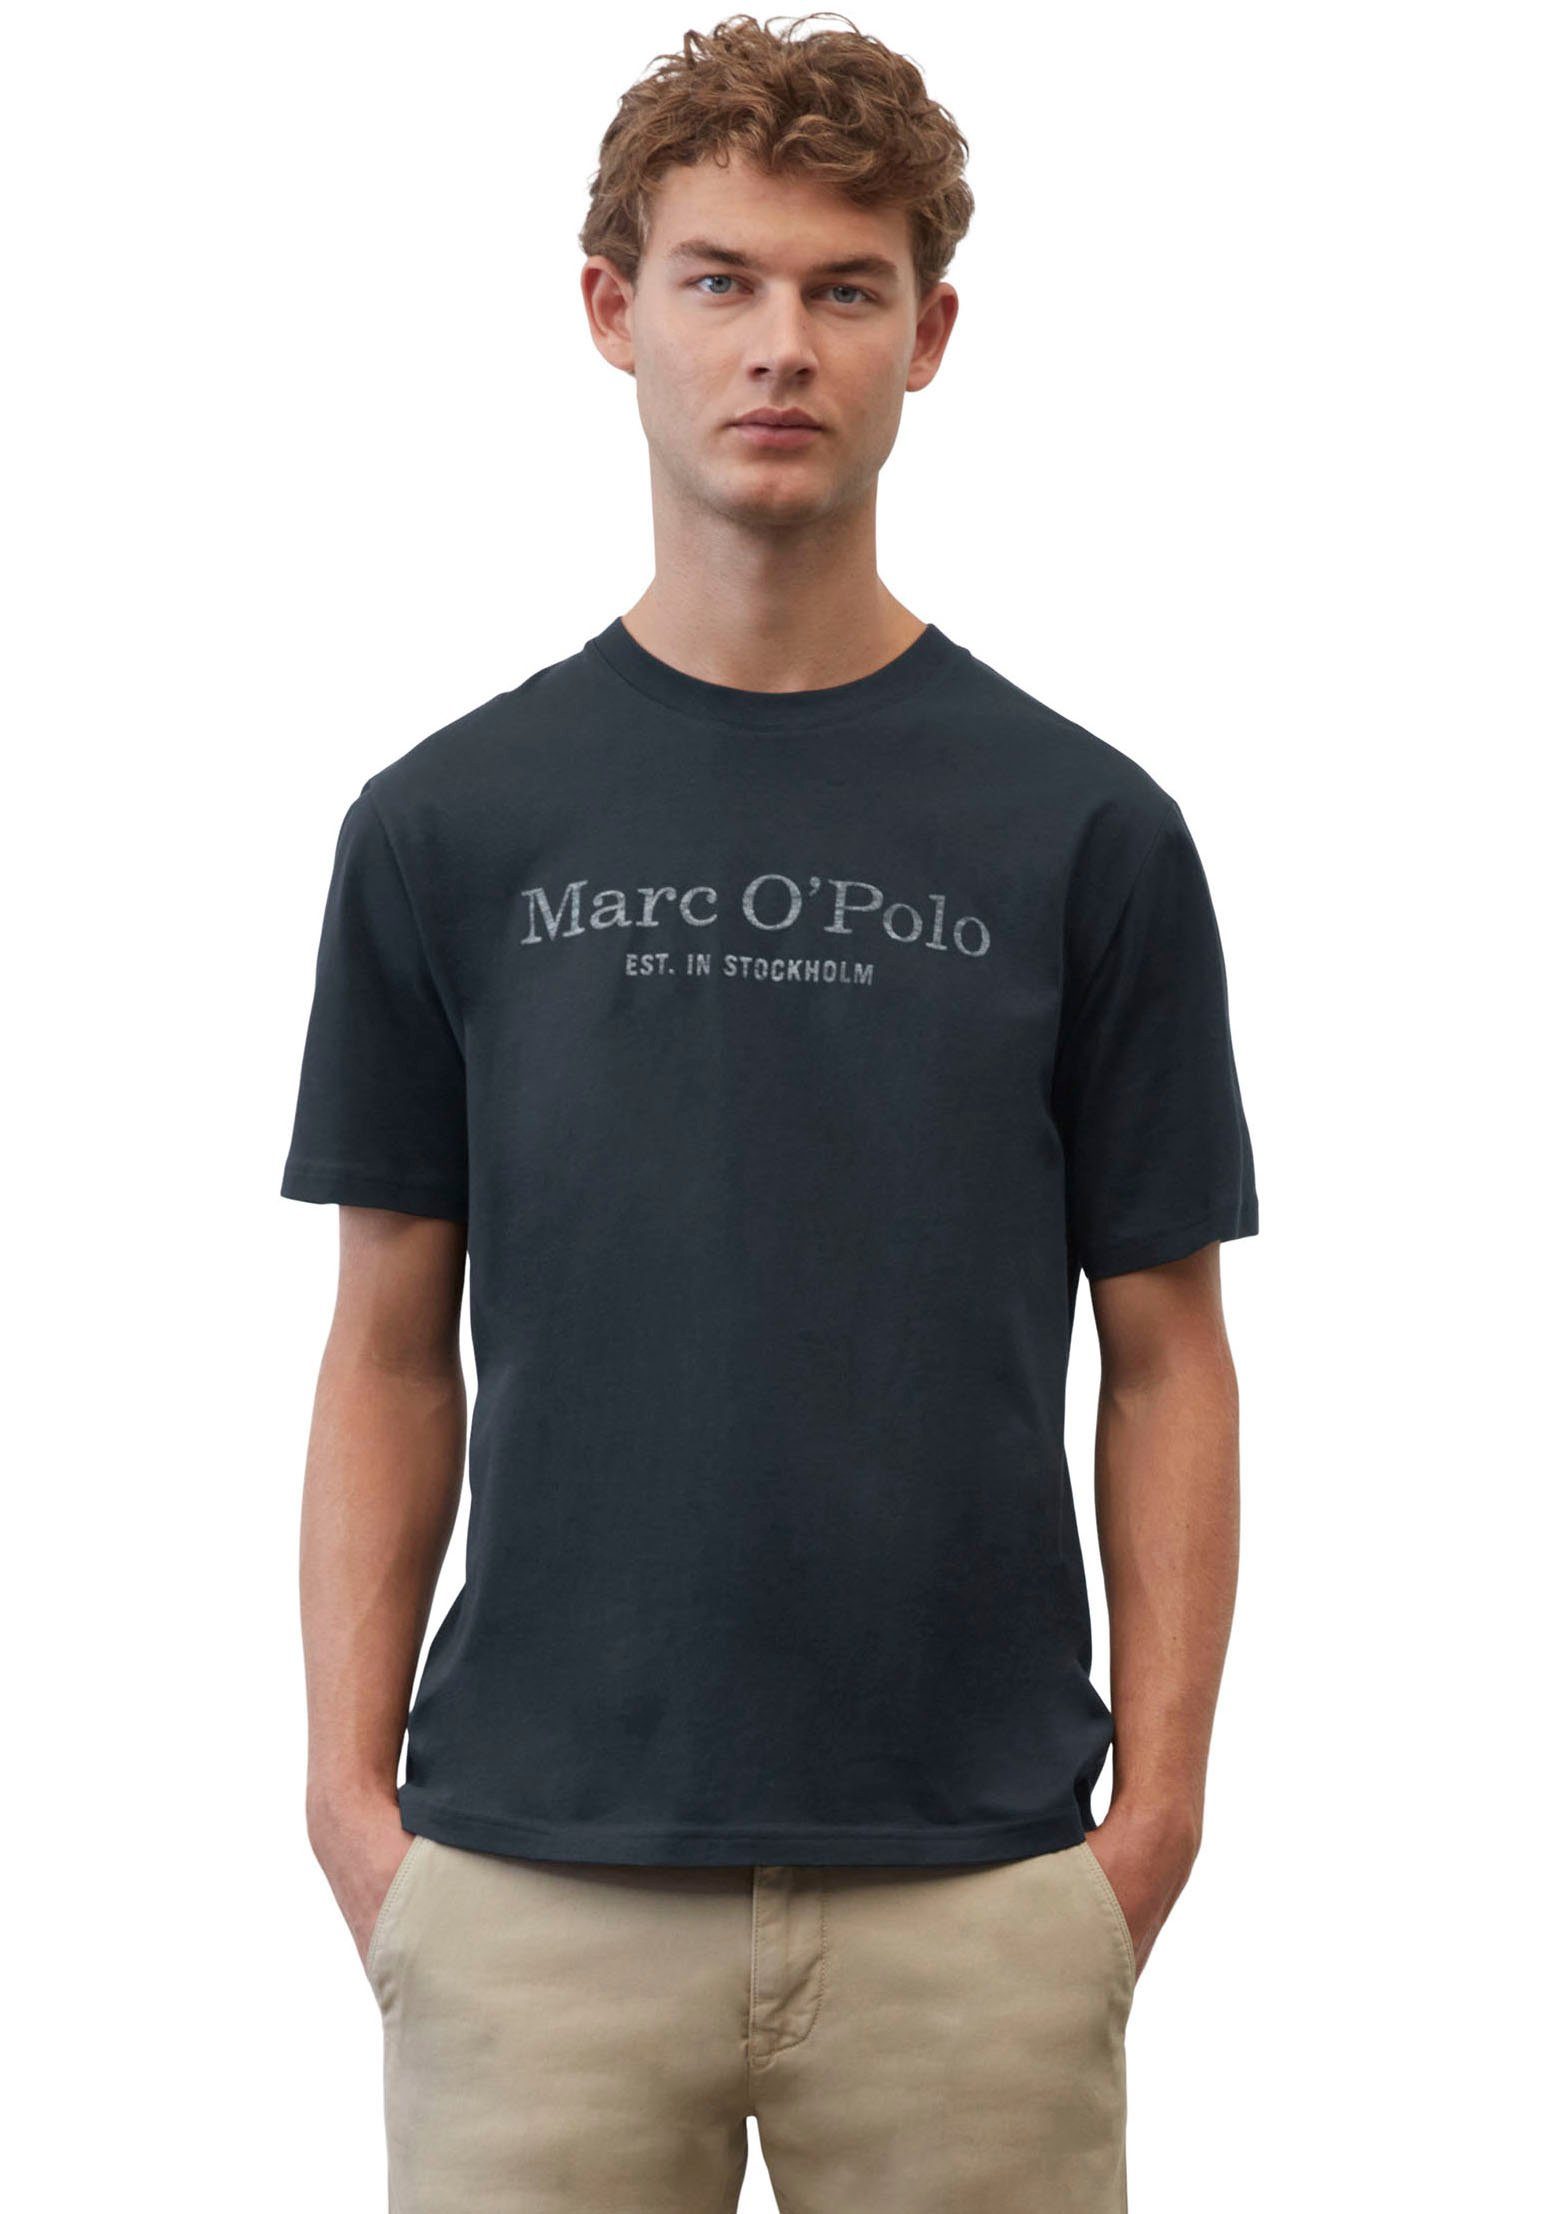 Marc O'Polo T-Shirt klassisches Logo-T-Shirt dark night